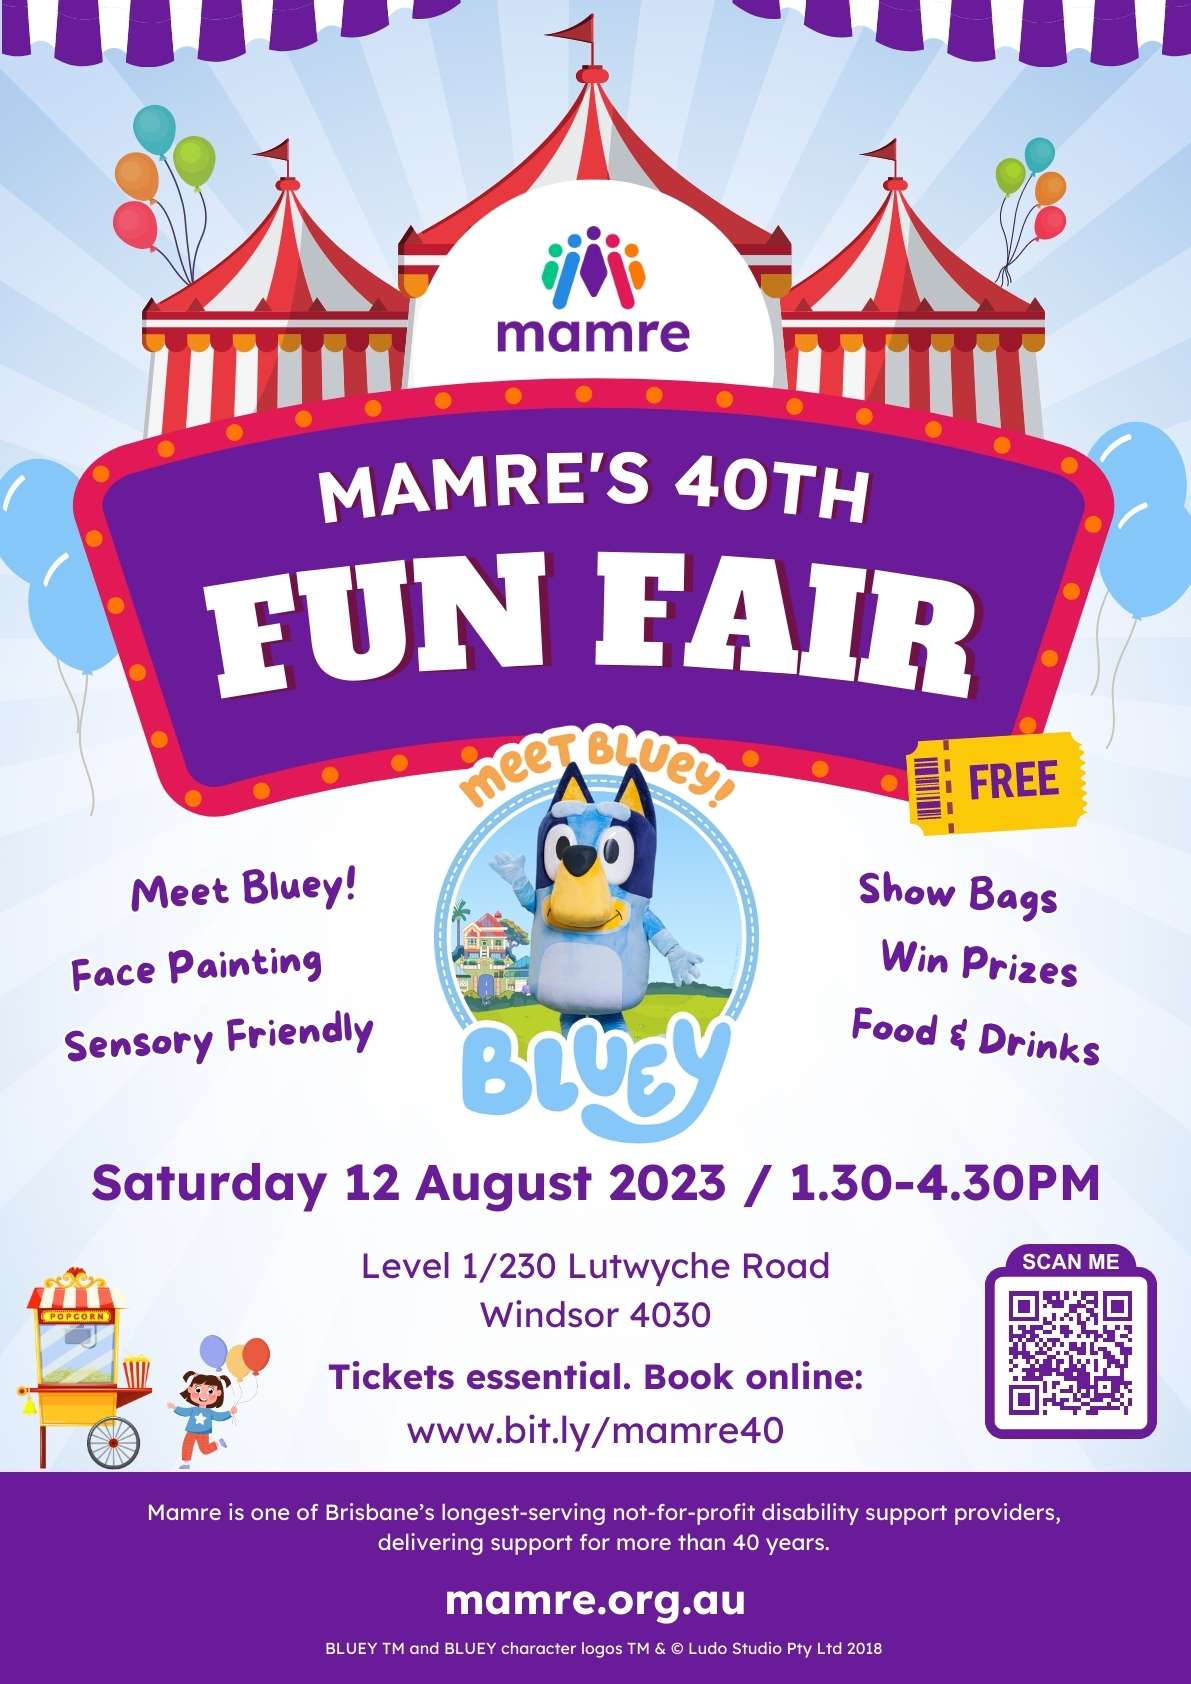 Mamre 40th Fun Fair Event Invitiation Flyer